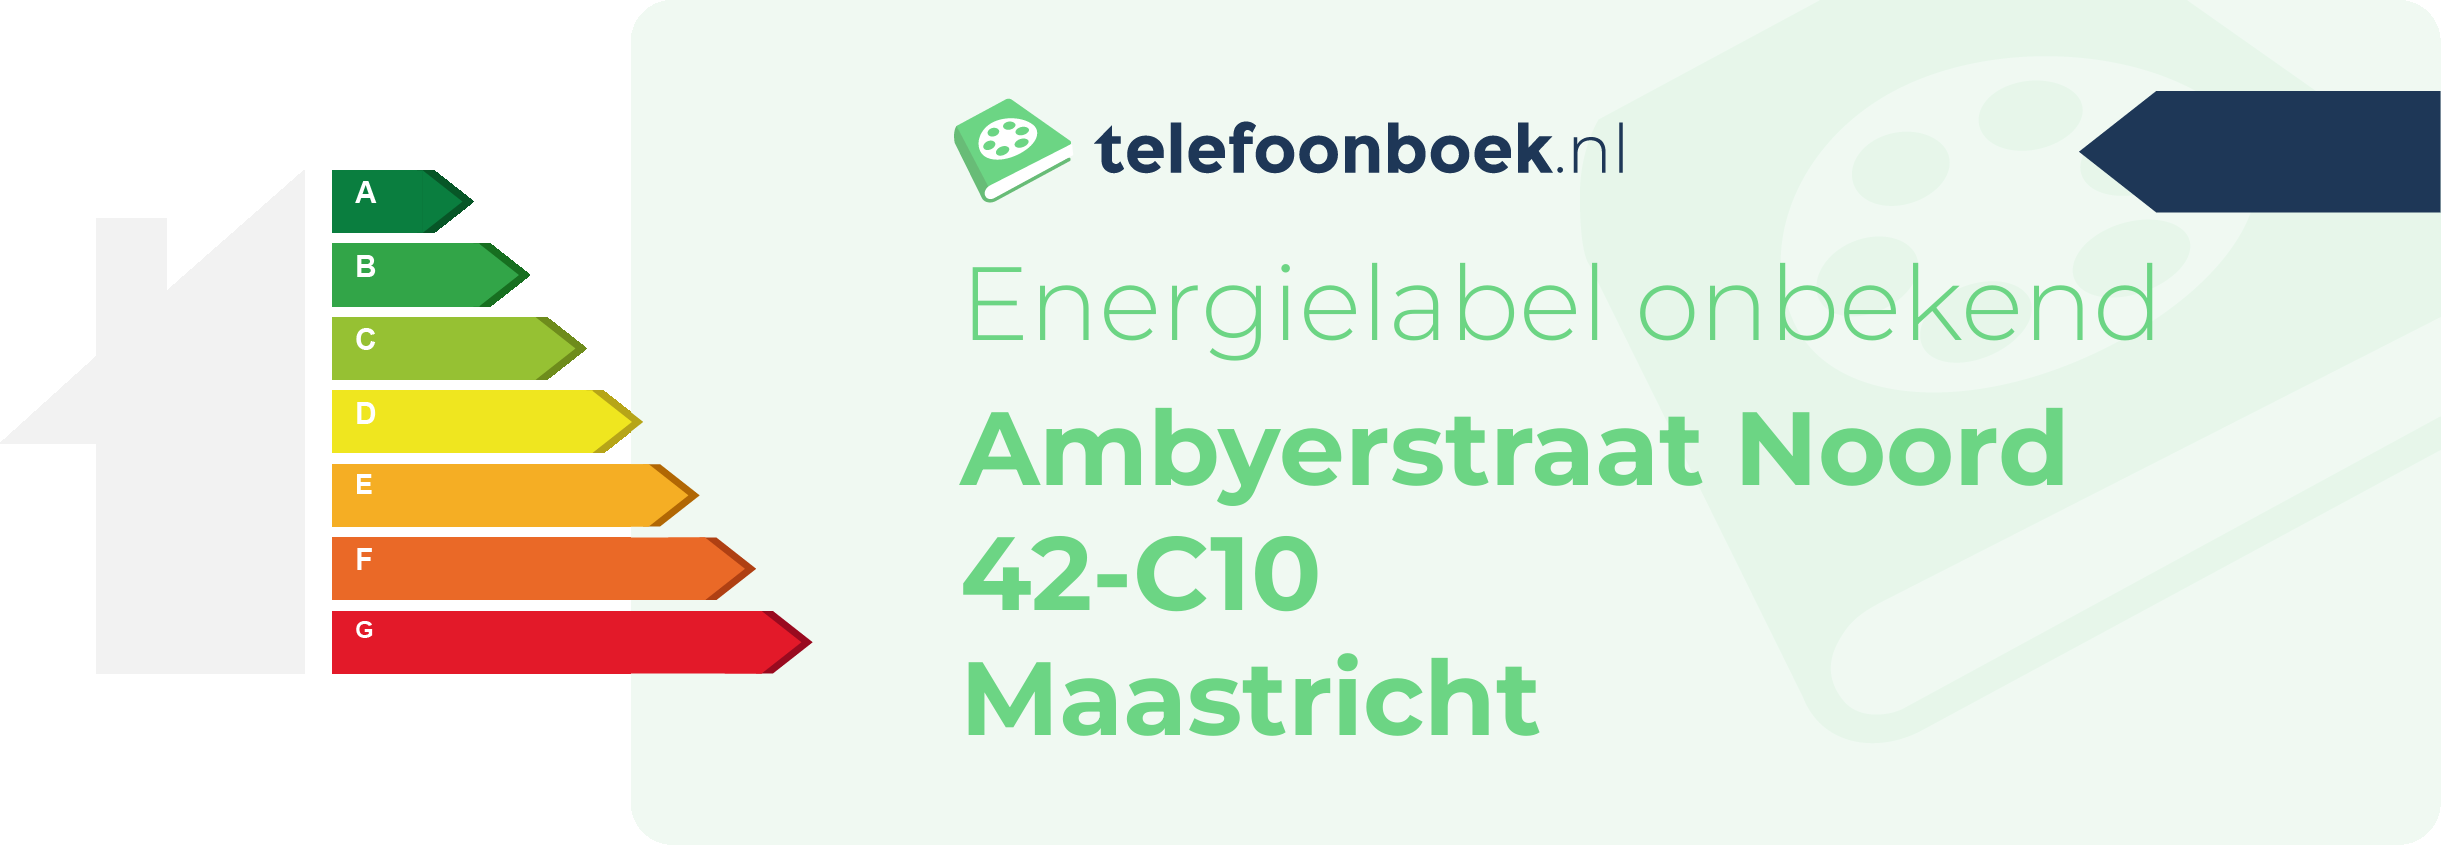 Energielabel Ambyerstraat Noord 42-C10 Maastricht